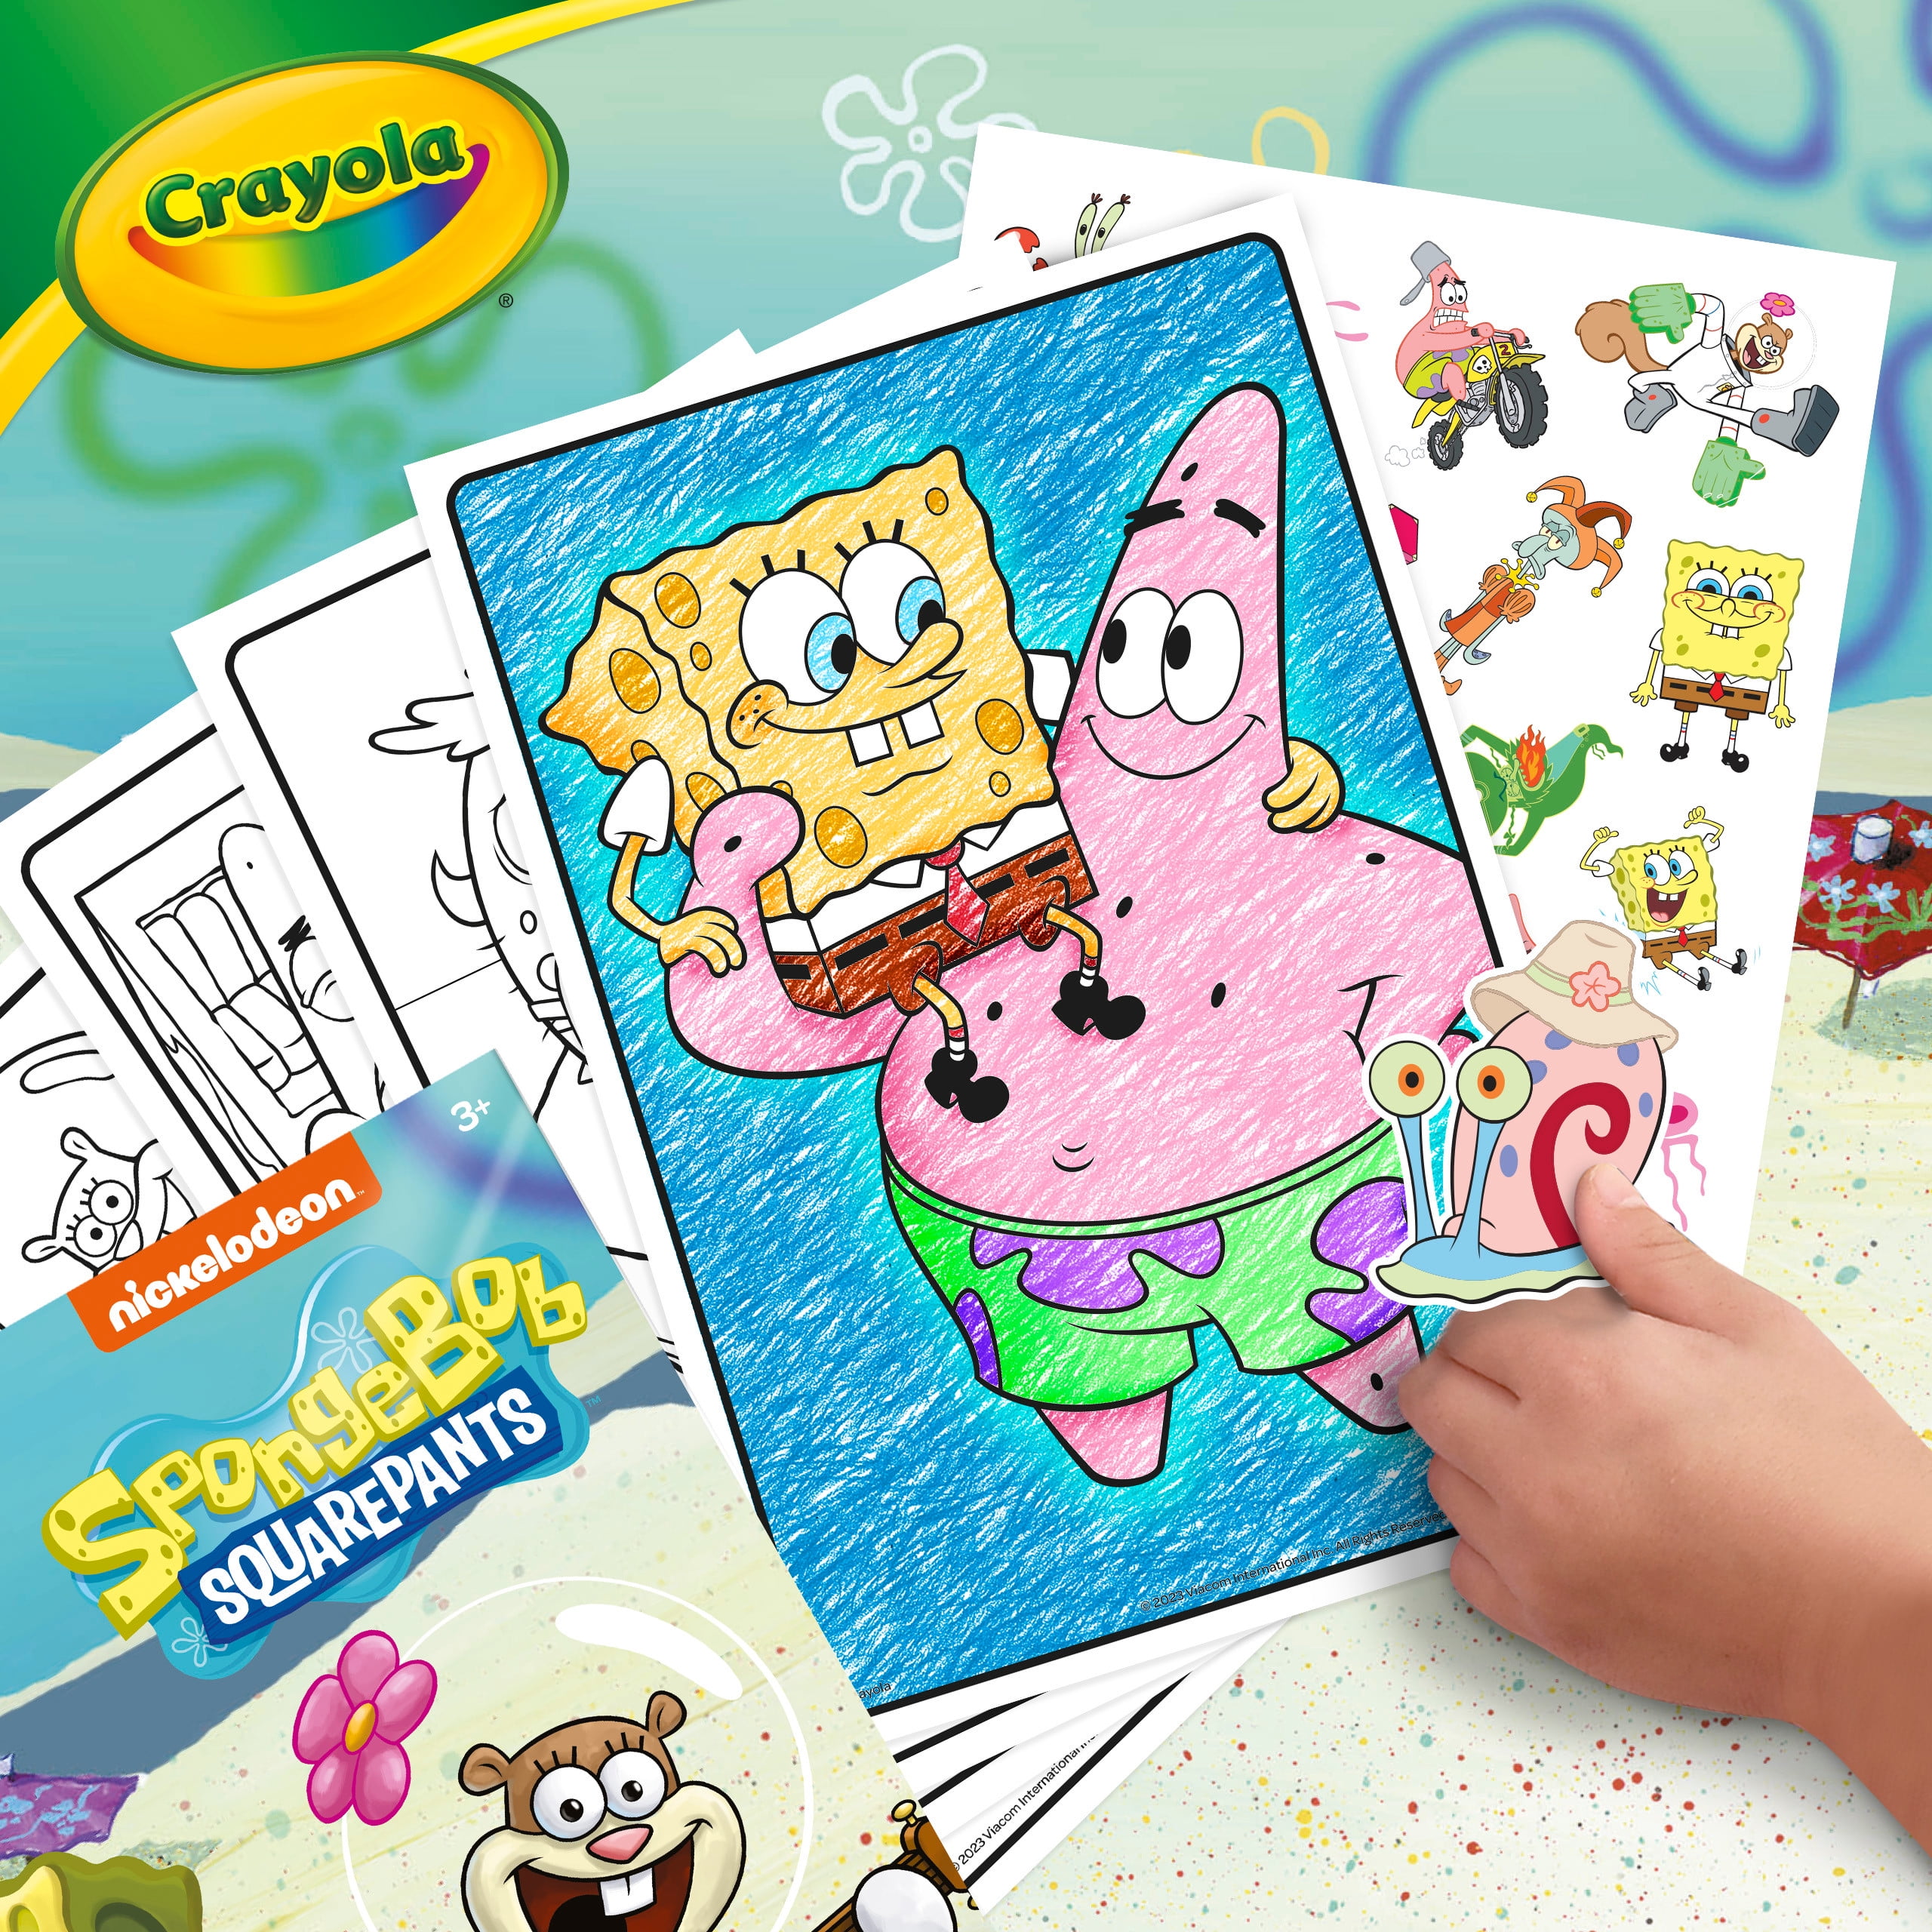 Spongebob Squarepants Coloring Book: Funny And Easy Coloring Books